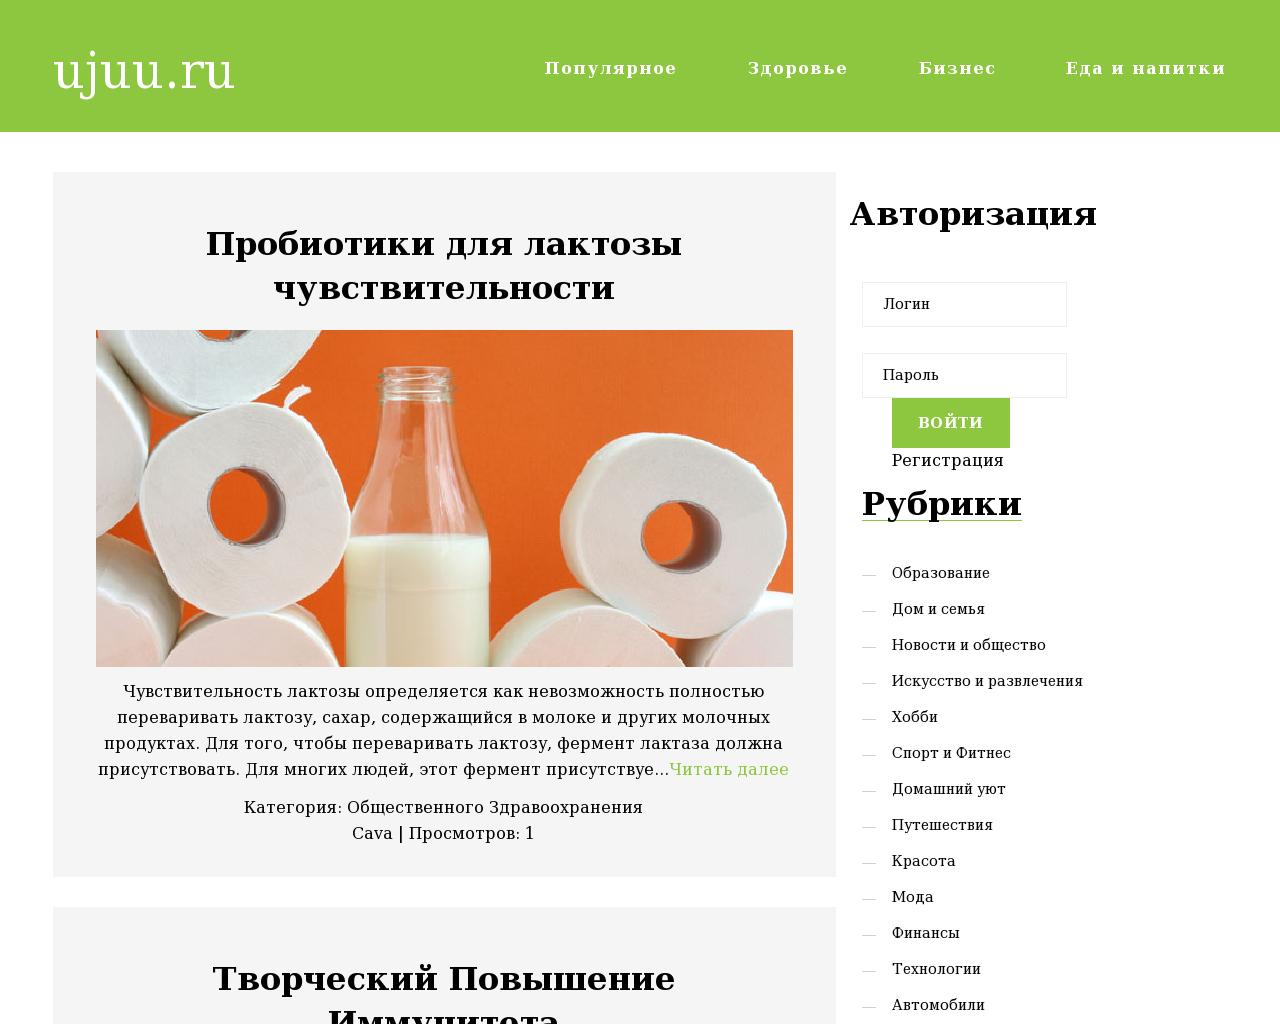 Изображение сайта ujuu.ru в разрешении 1280x1024